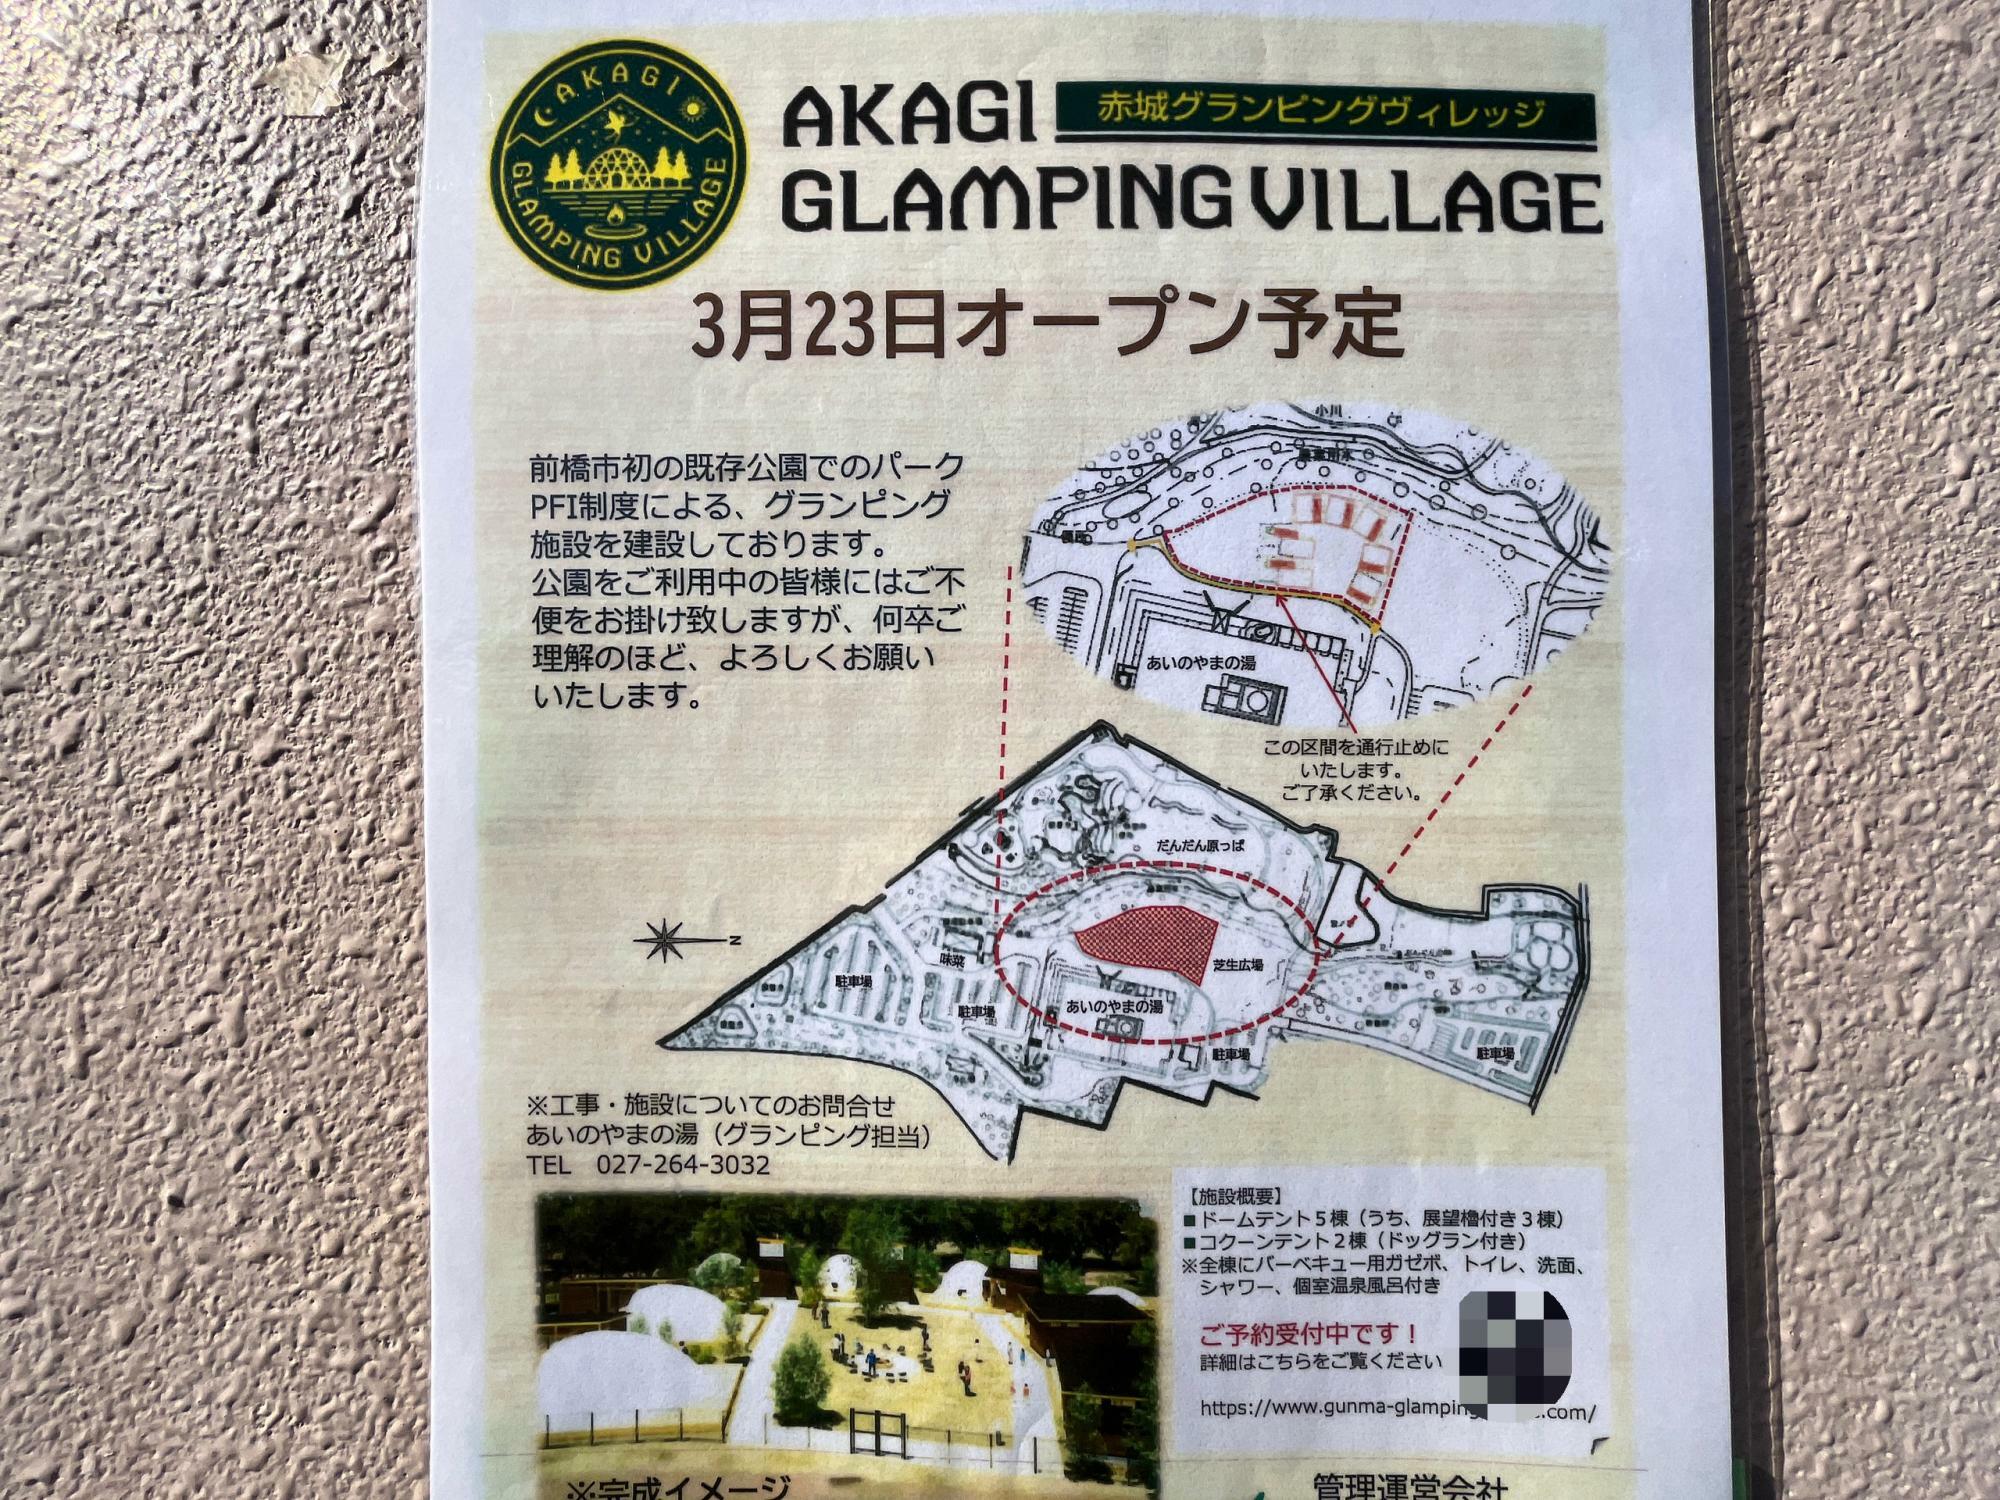 「AKAGI GLAMPING VILLAGE」のオープン告知のポスター